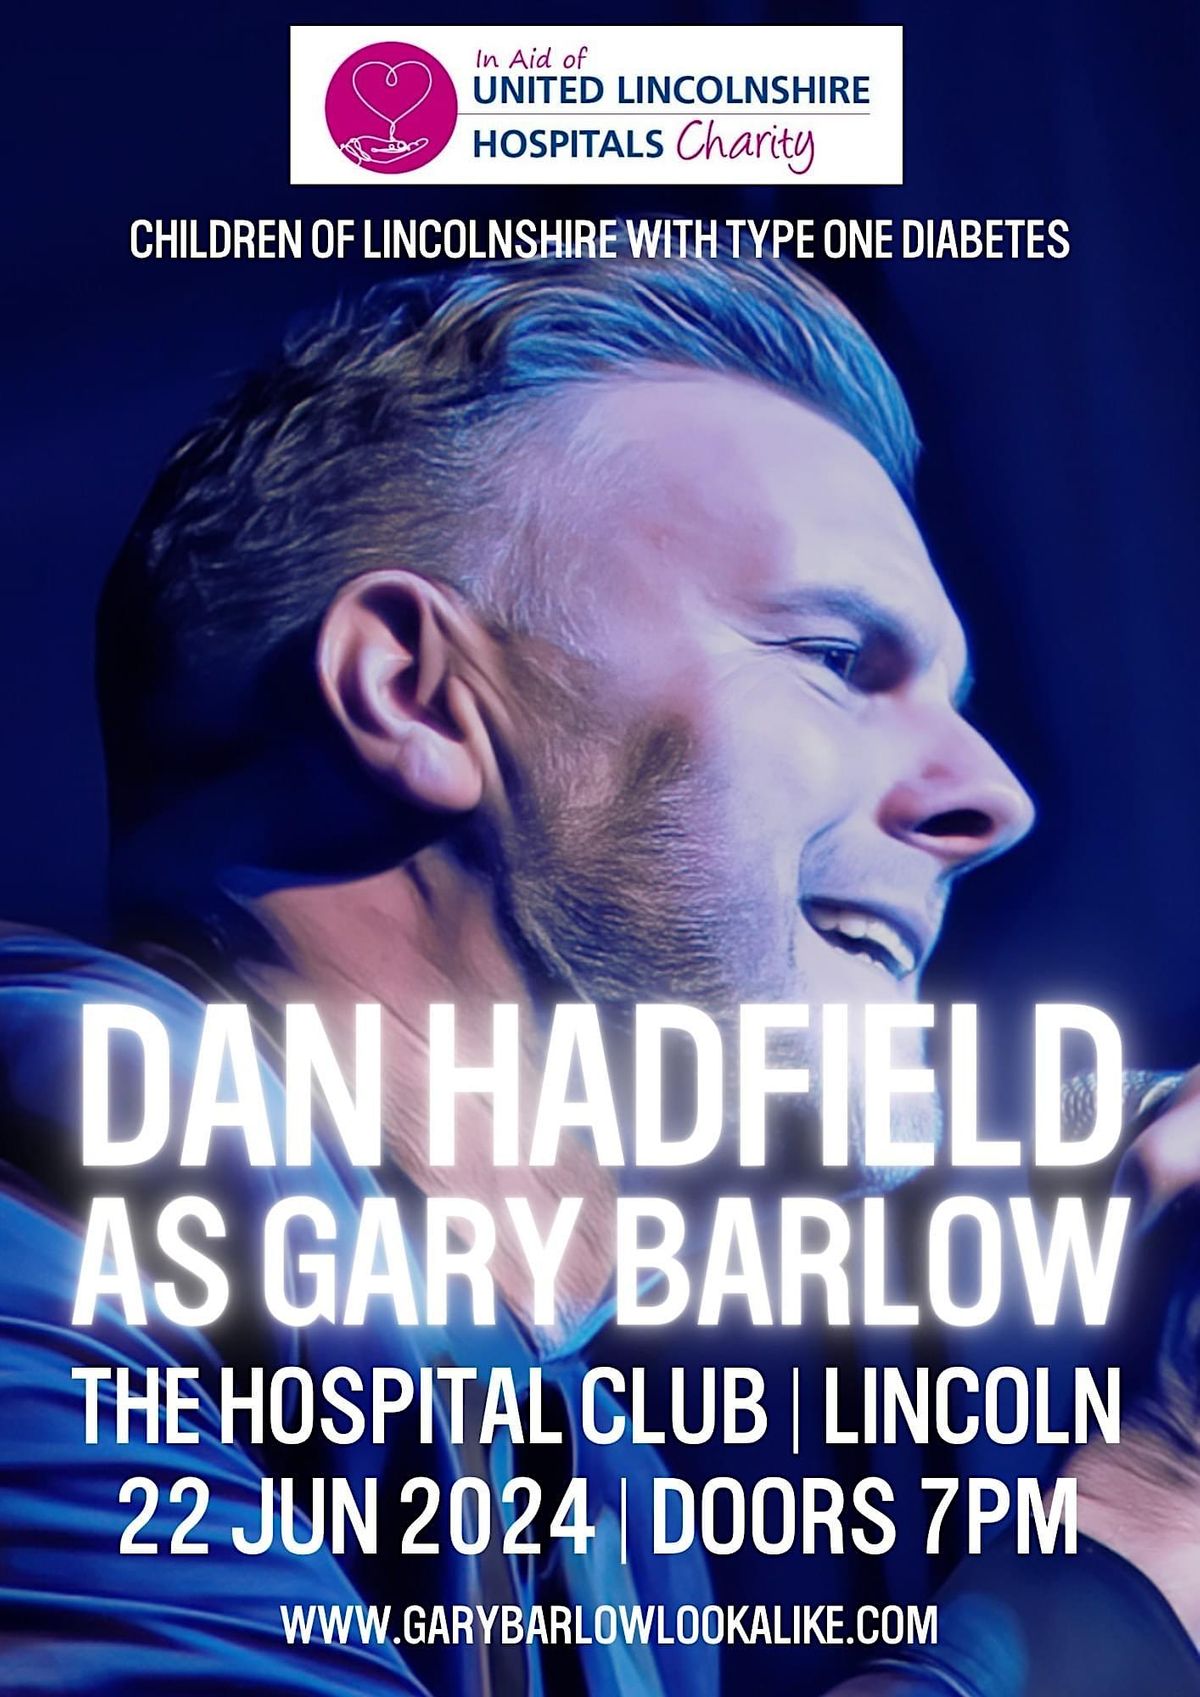 Dan Hadfield performing as Gary Barlow at Lincoln Hospital Social Club